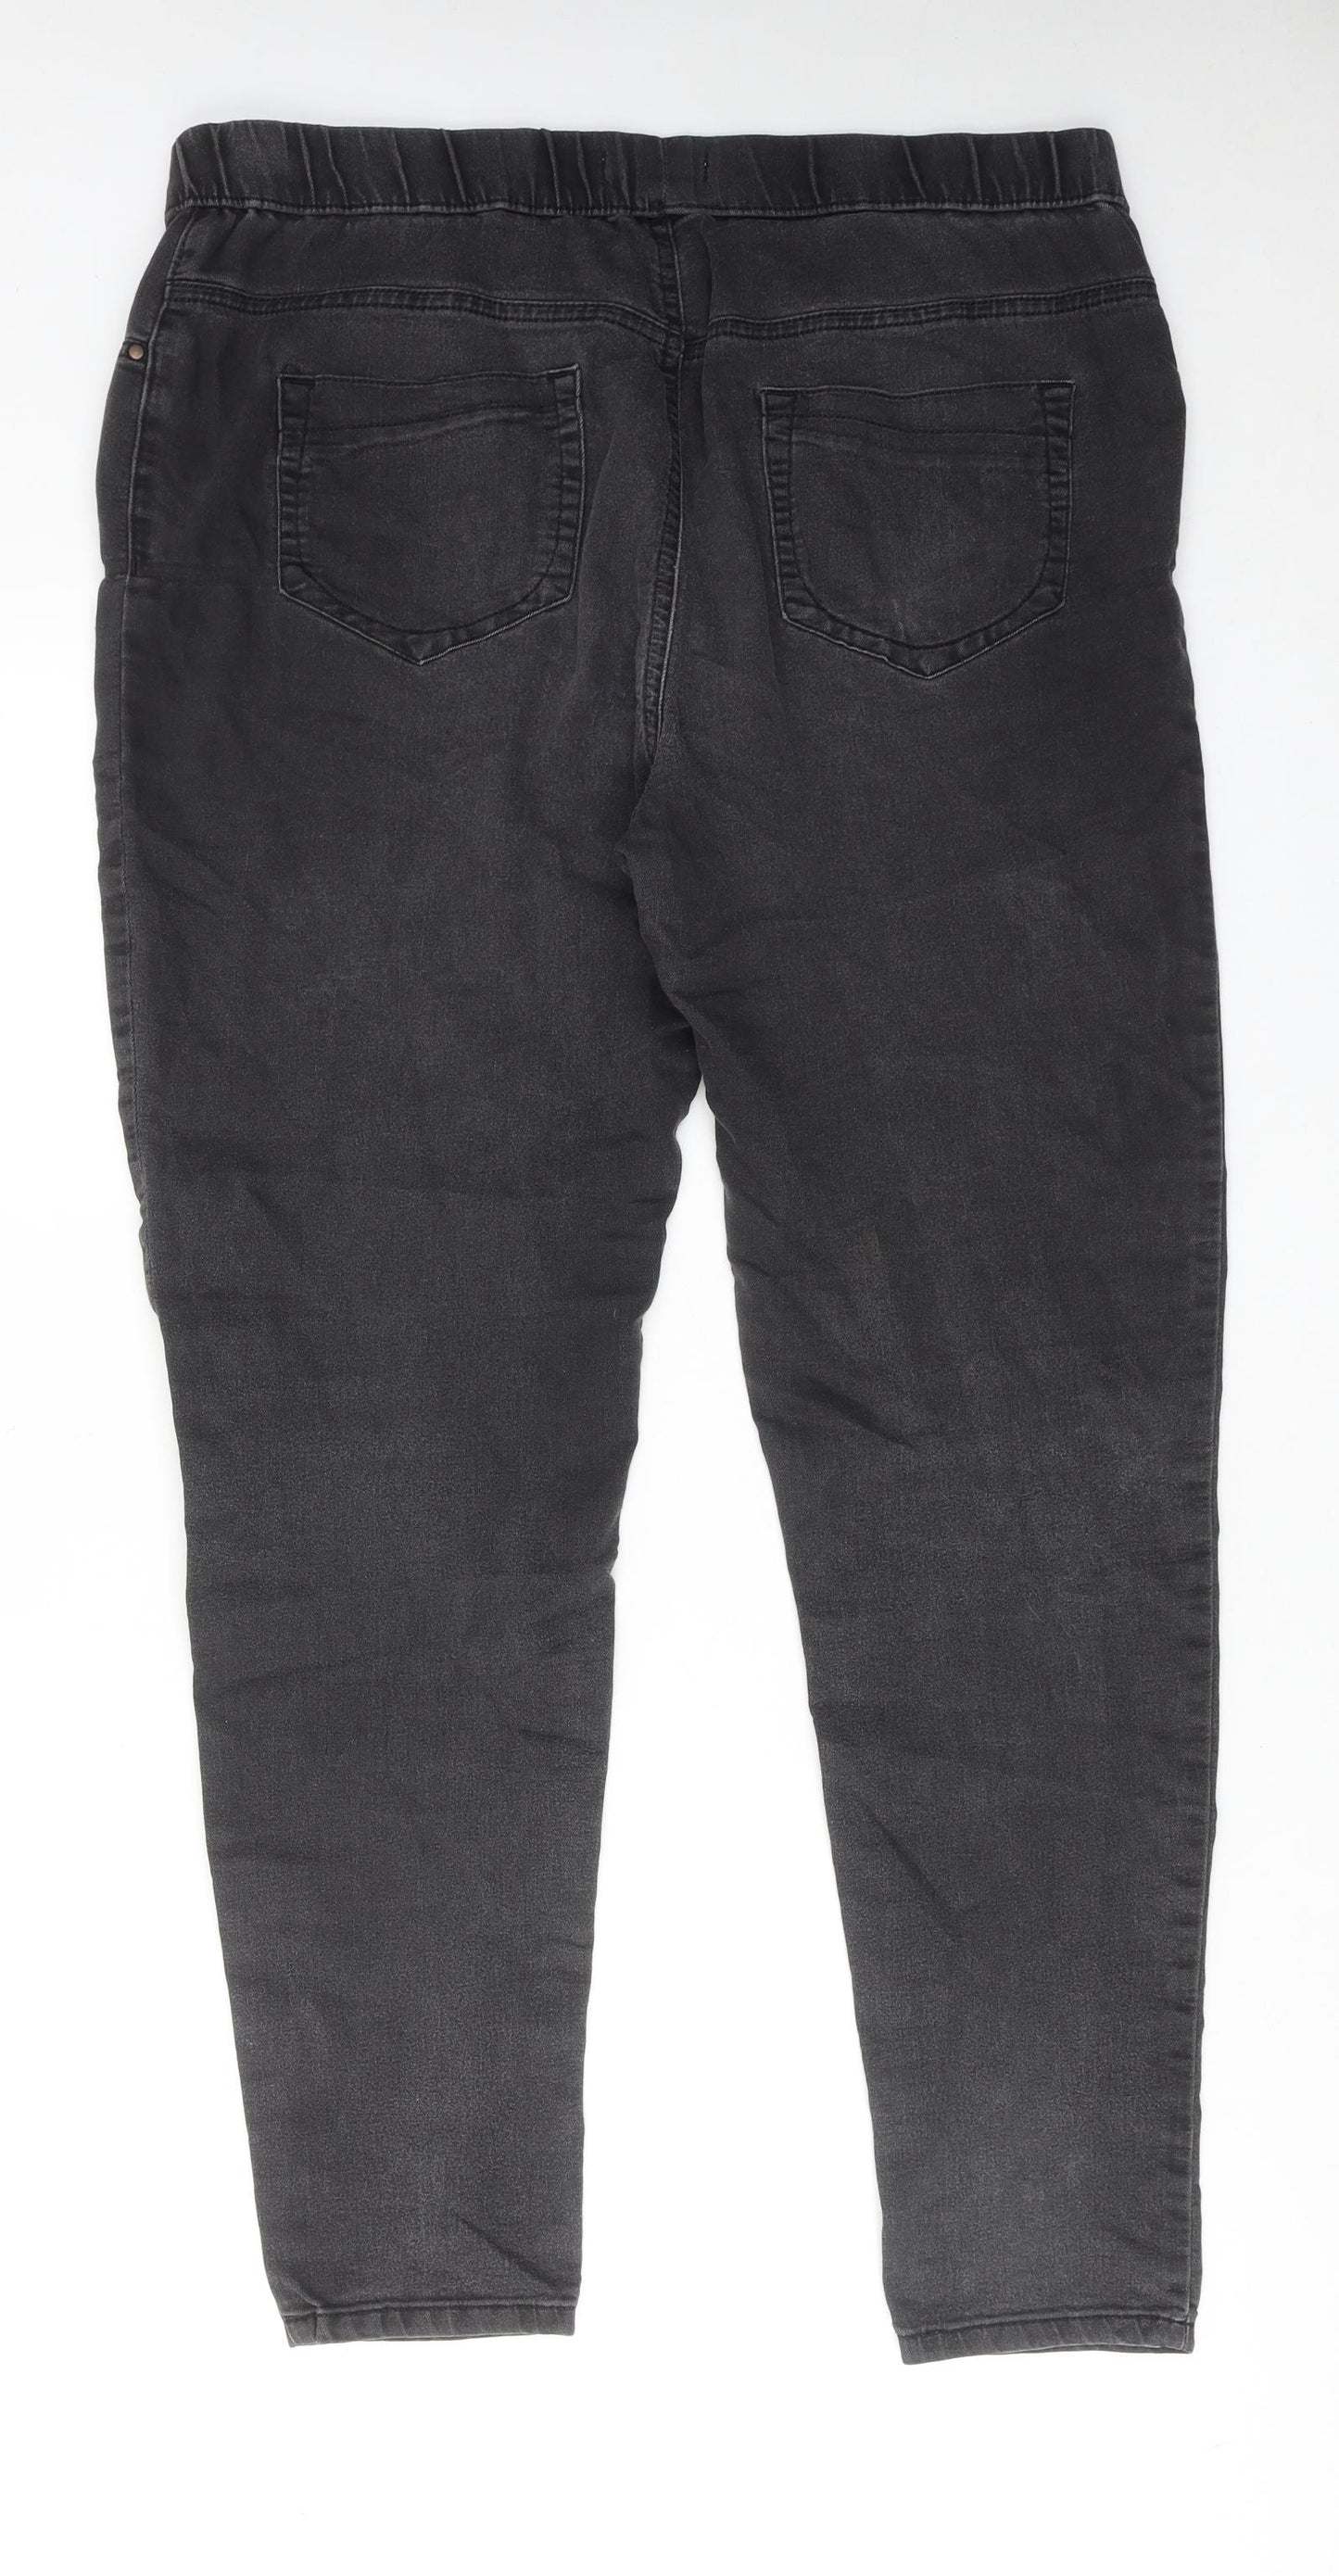 TU Womens Grey Cotton Jegging Jeans Size 16 Regular